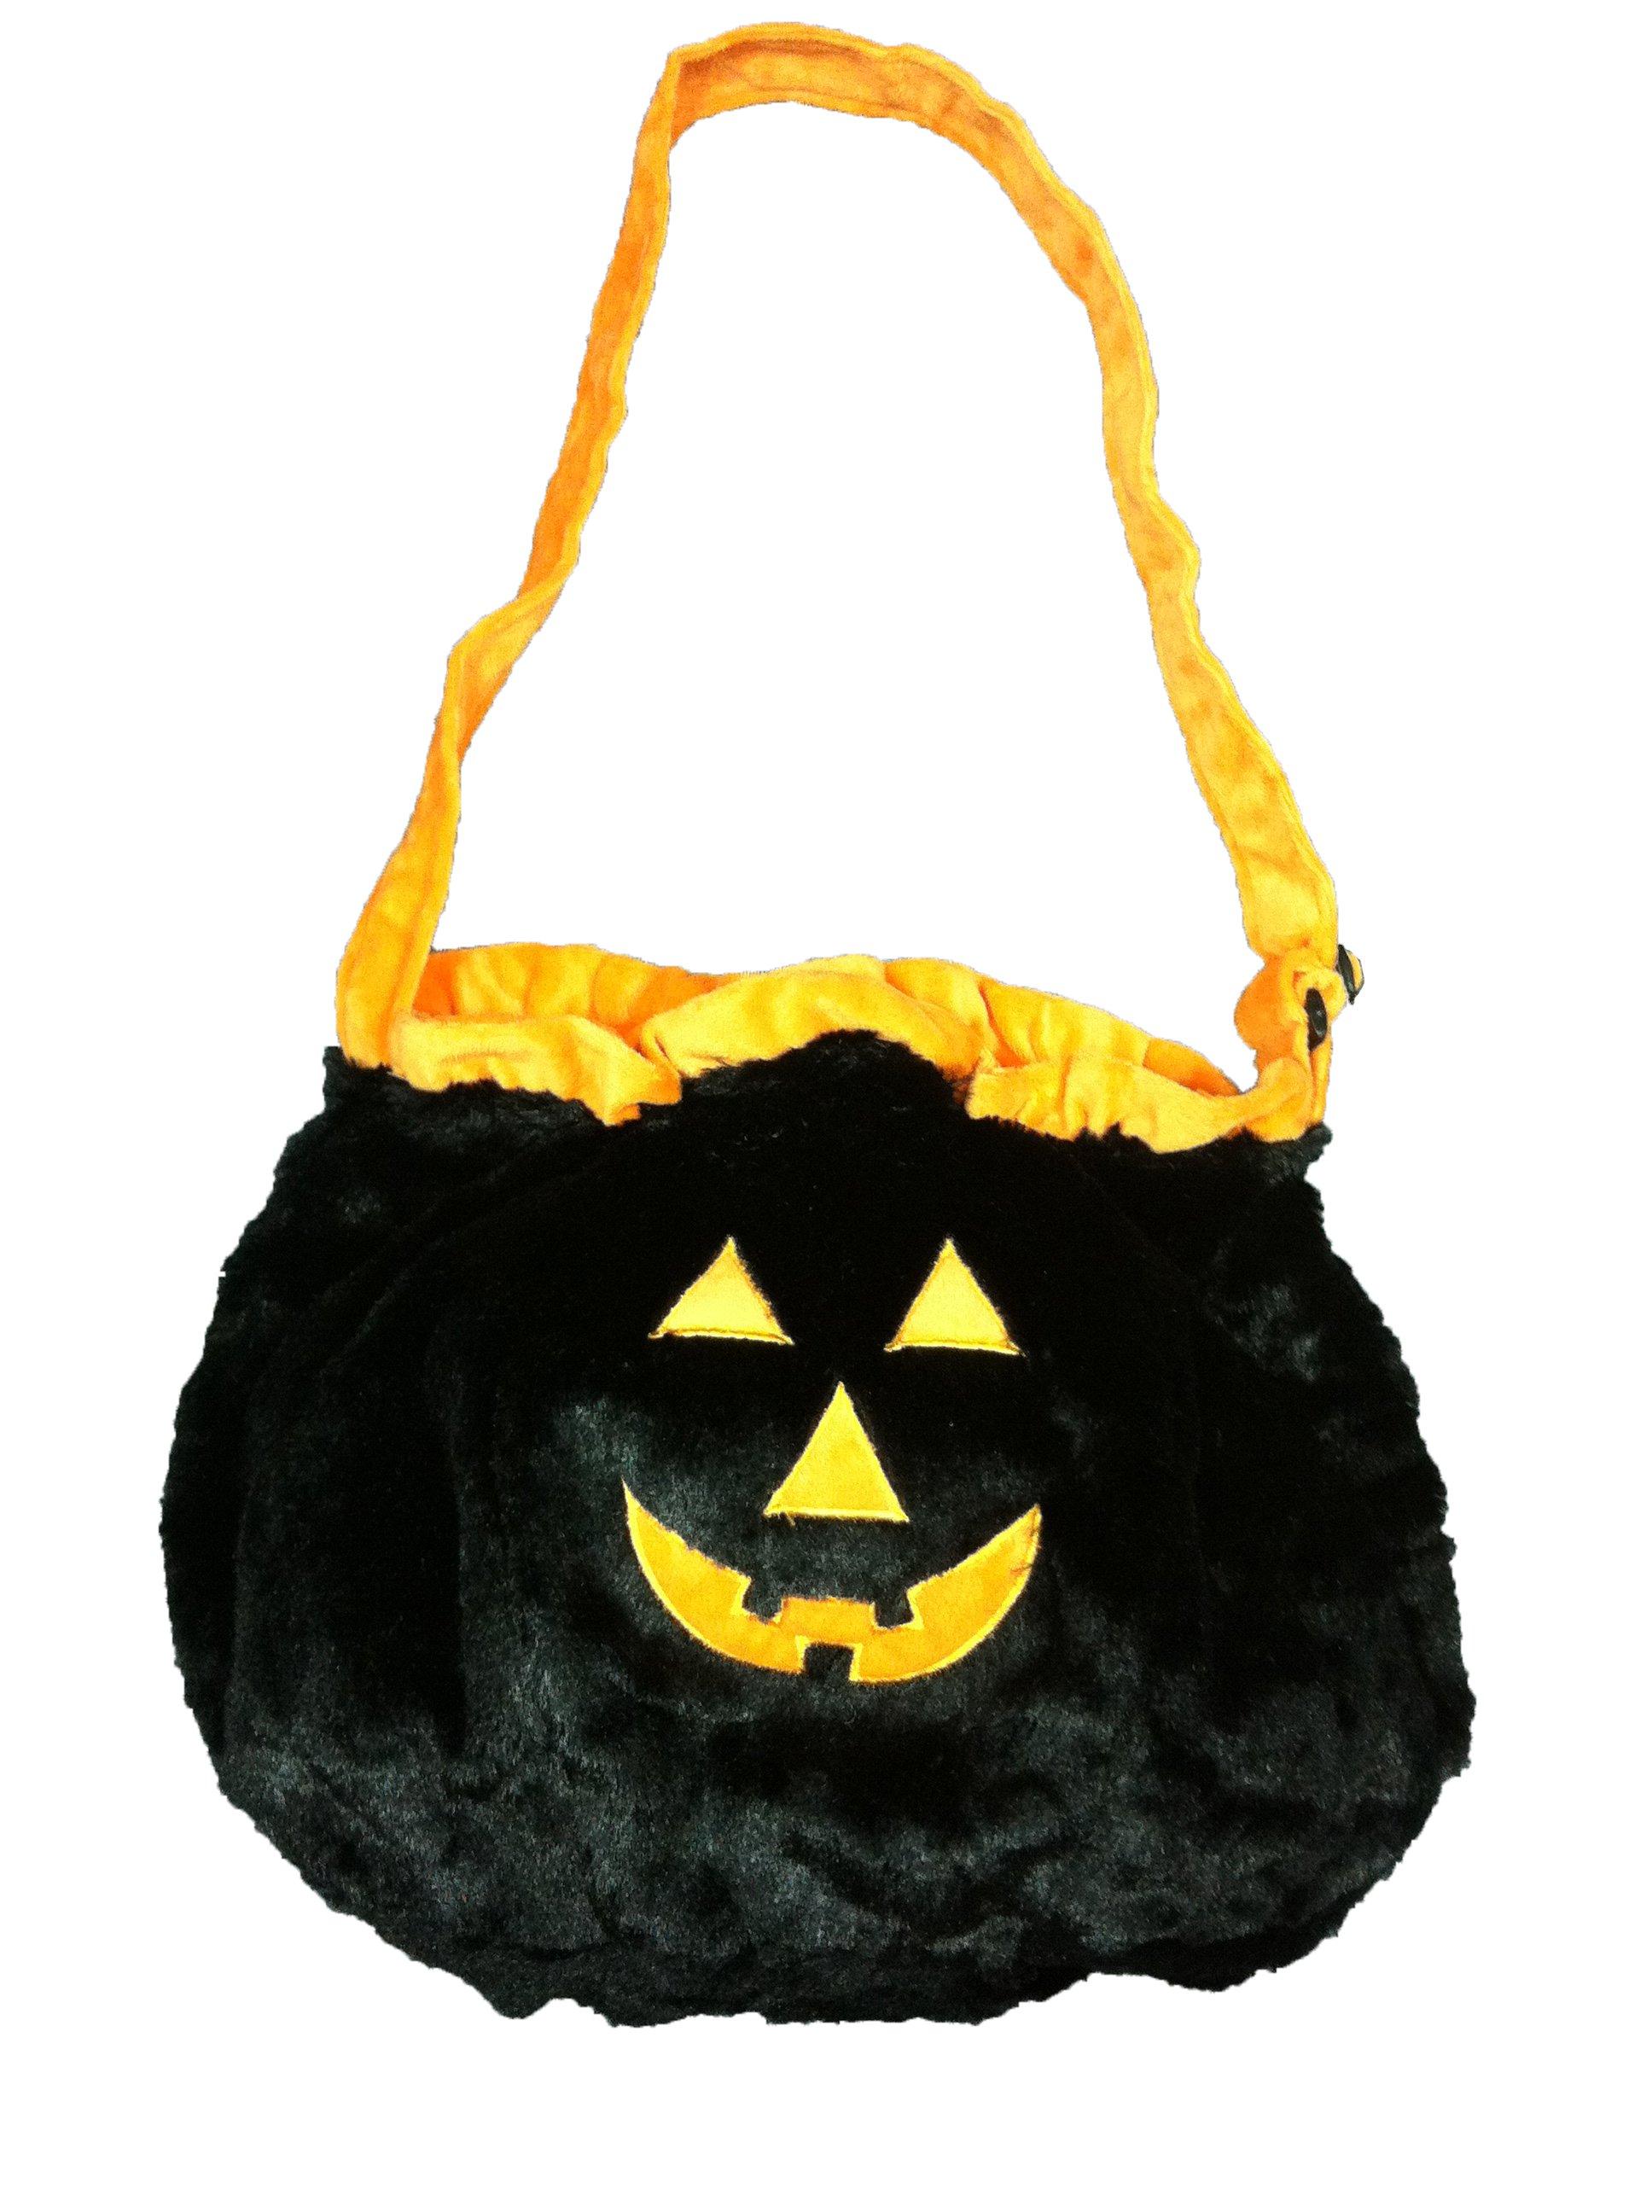 NA Halloween Pumpkin Bag Black Black